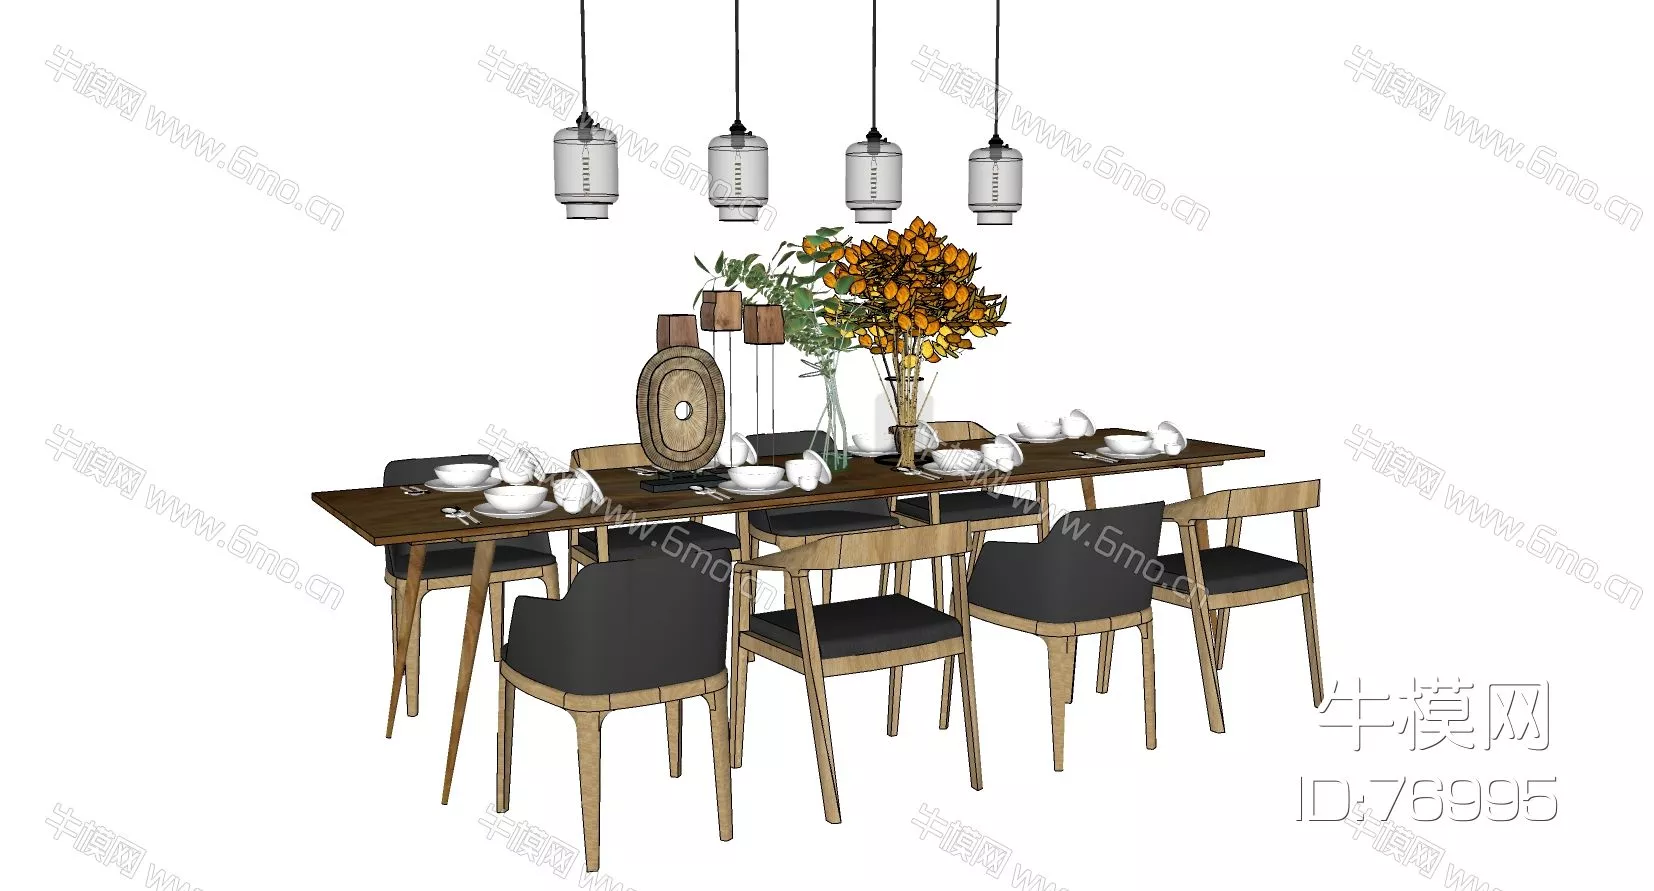 NORDIC DINING TABLE SET - SKETCHUP 3D MODEL - ENSCAPE - 76995